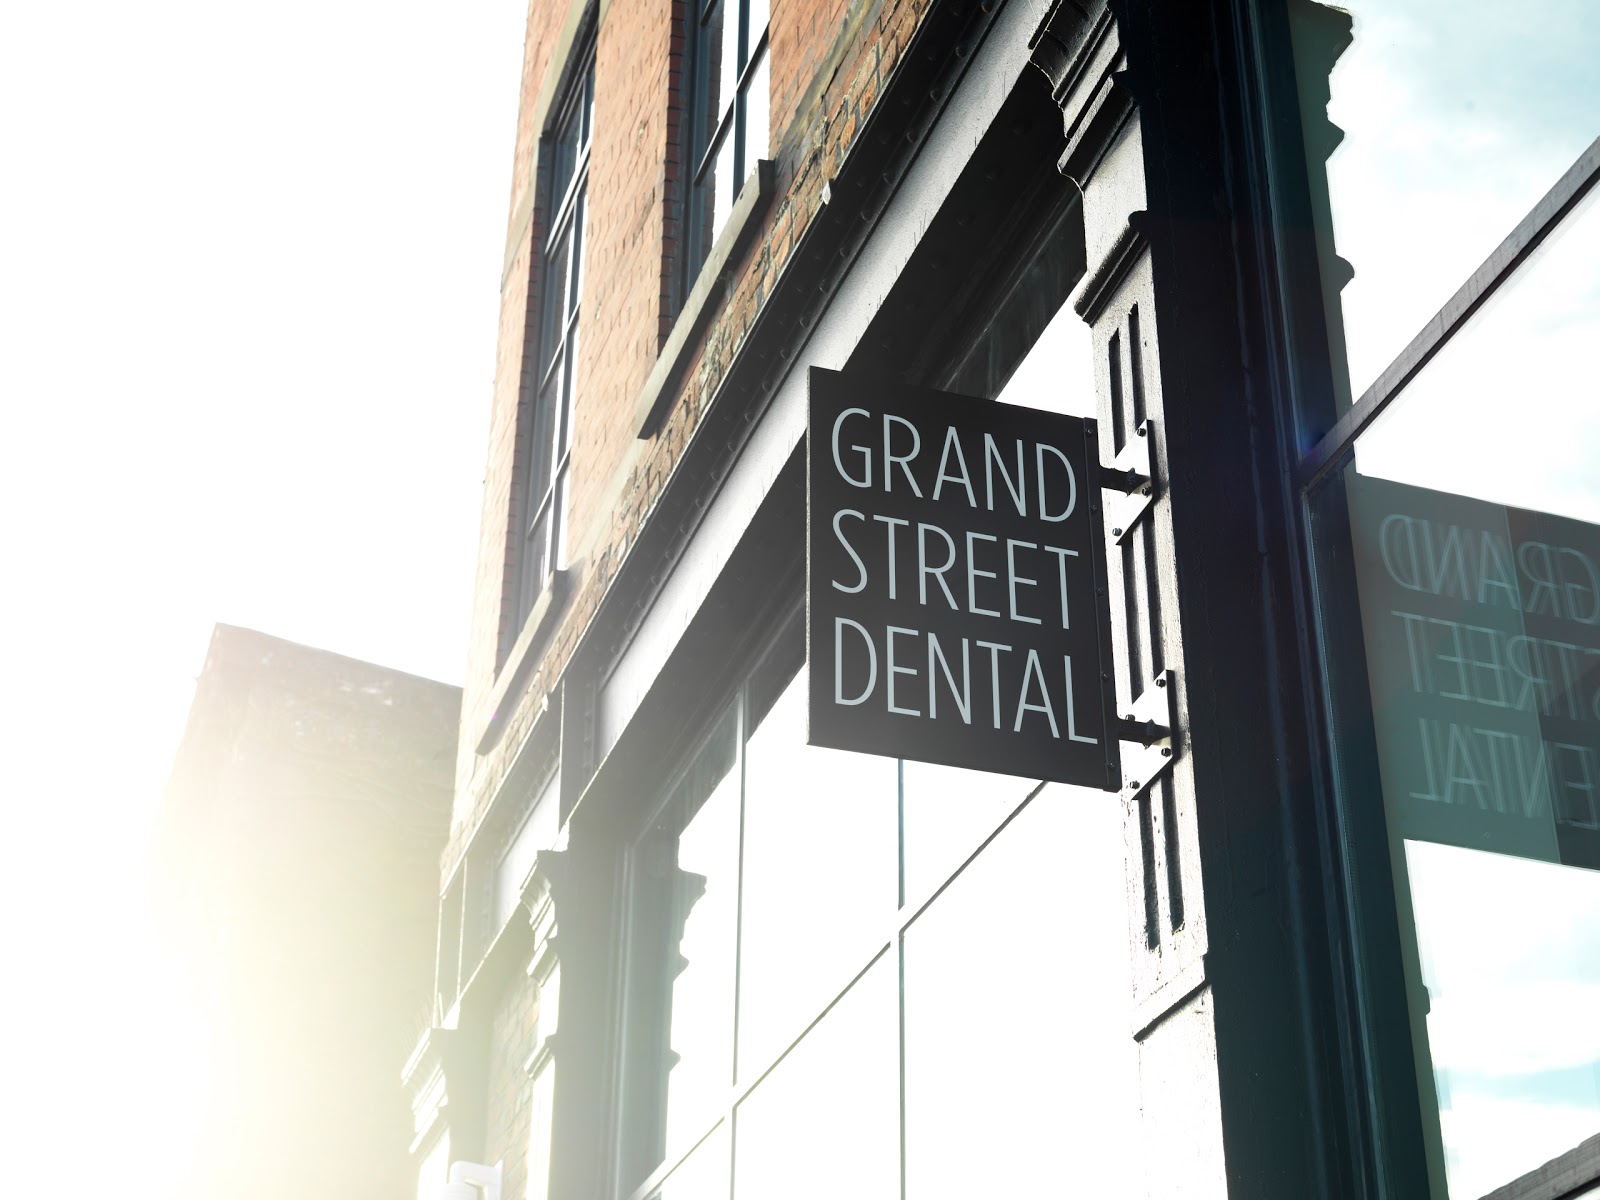 Photo of Grand Street Dental: Dr. Jennifer Plotnick in Kings County City, New York, United States - 6 Picture of Point of interest, Establishment, Health, Dentist